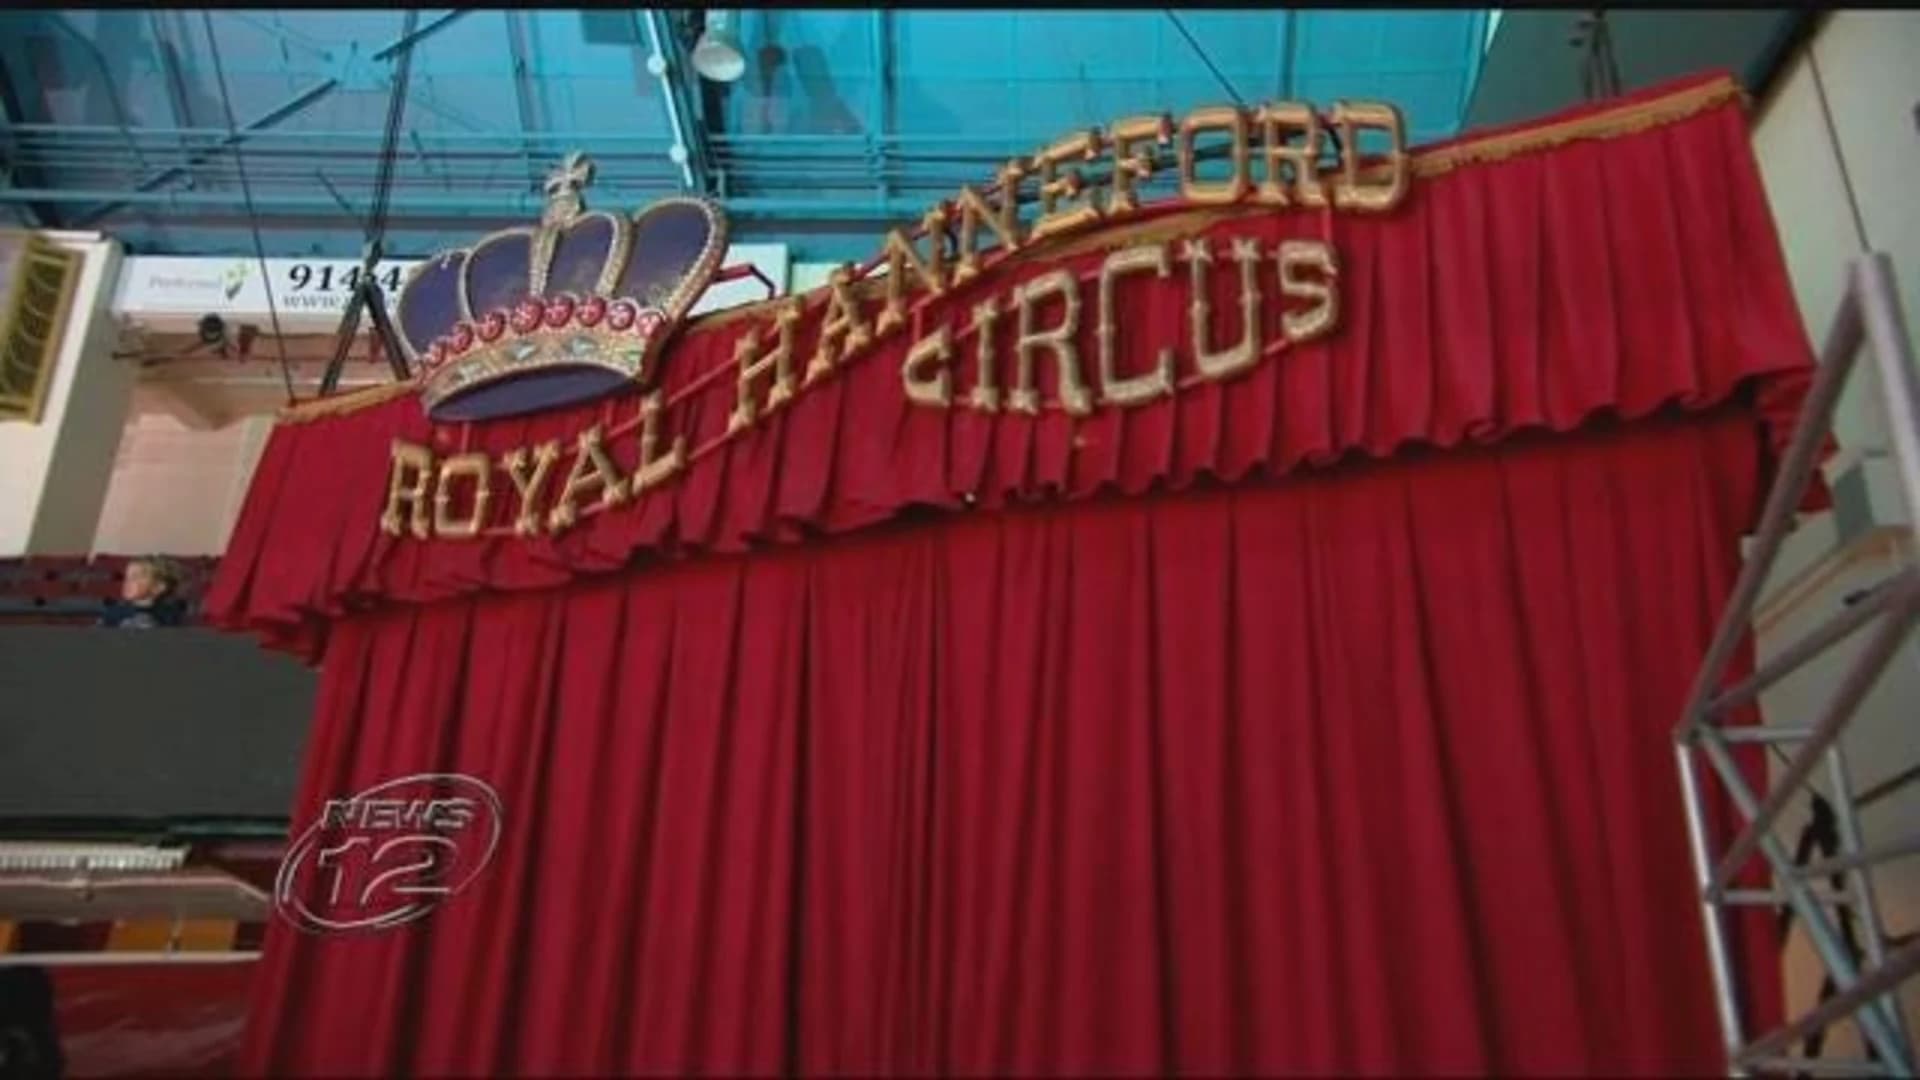 Turn To Tara: Circus gets new look following elephant ban